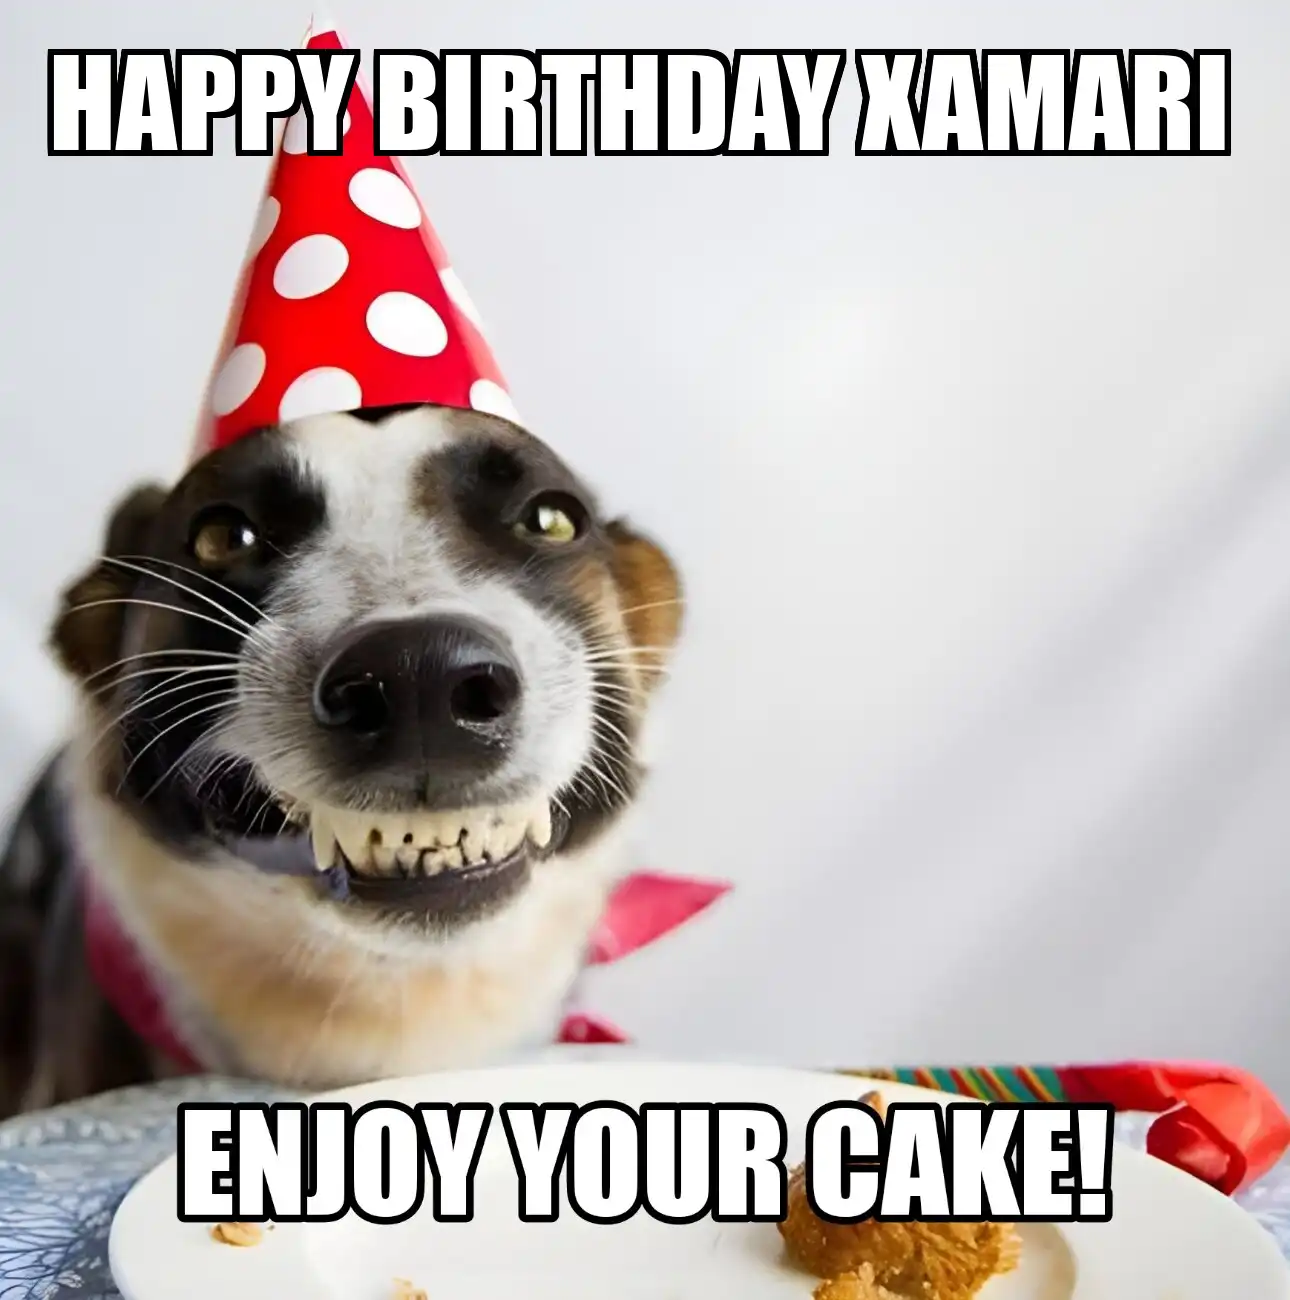 Happy Birthday Xamari Enjoy Your Cake Dog Meme